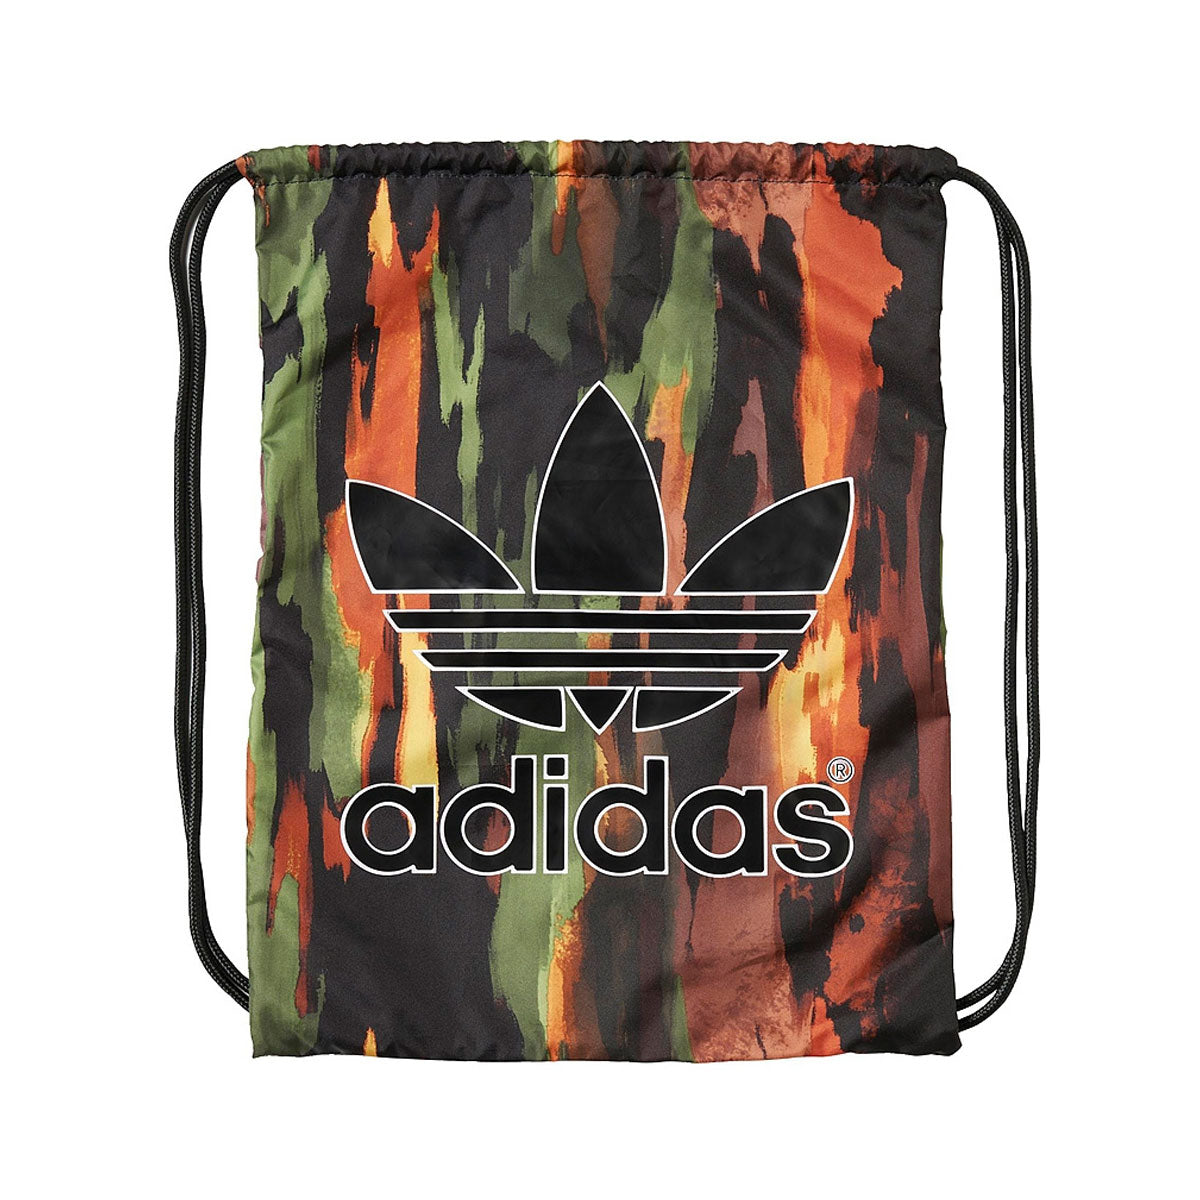 Adidas Originals Unisex Real Tree Camo Training Gymsack Sport Bag Backpack